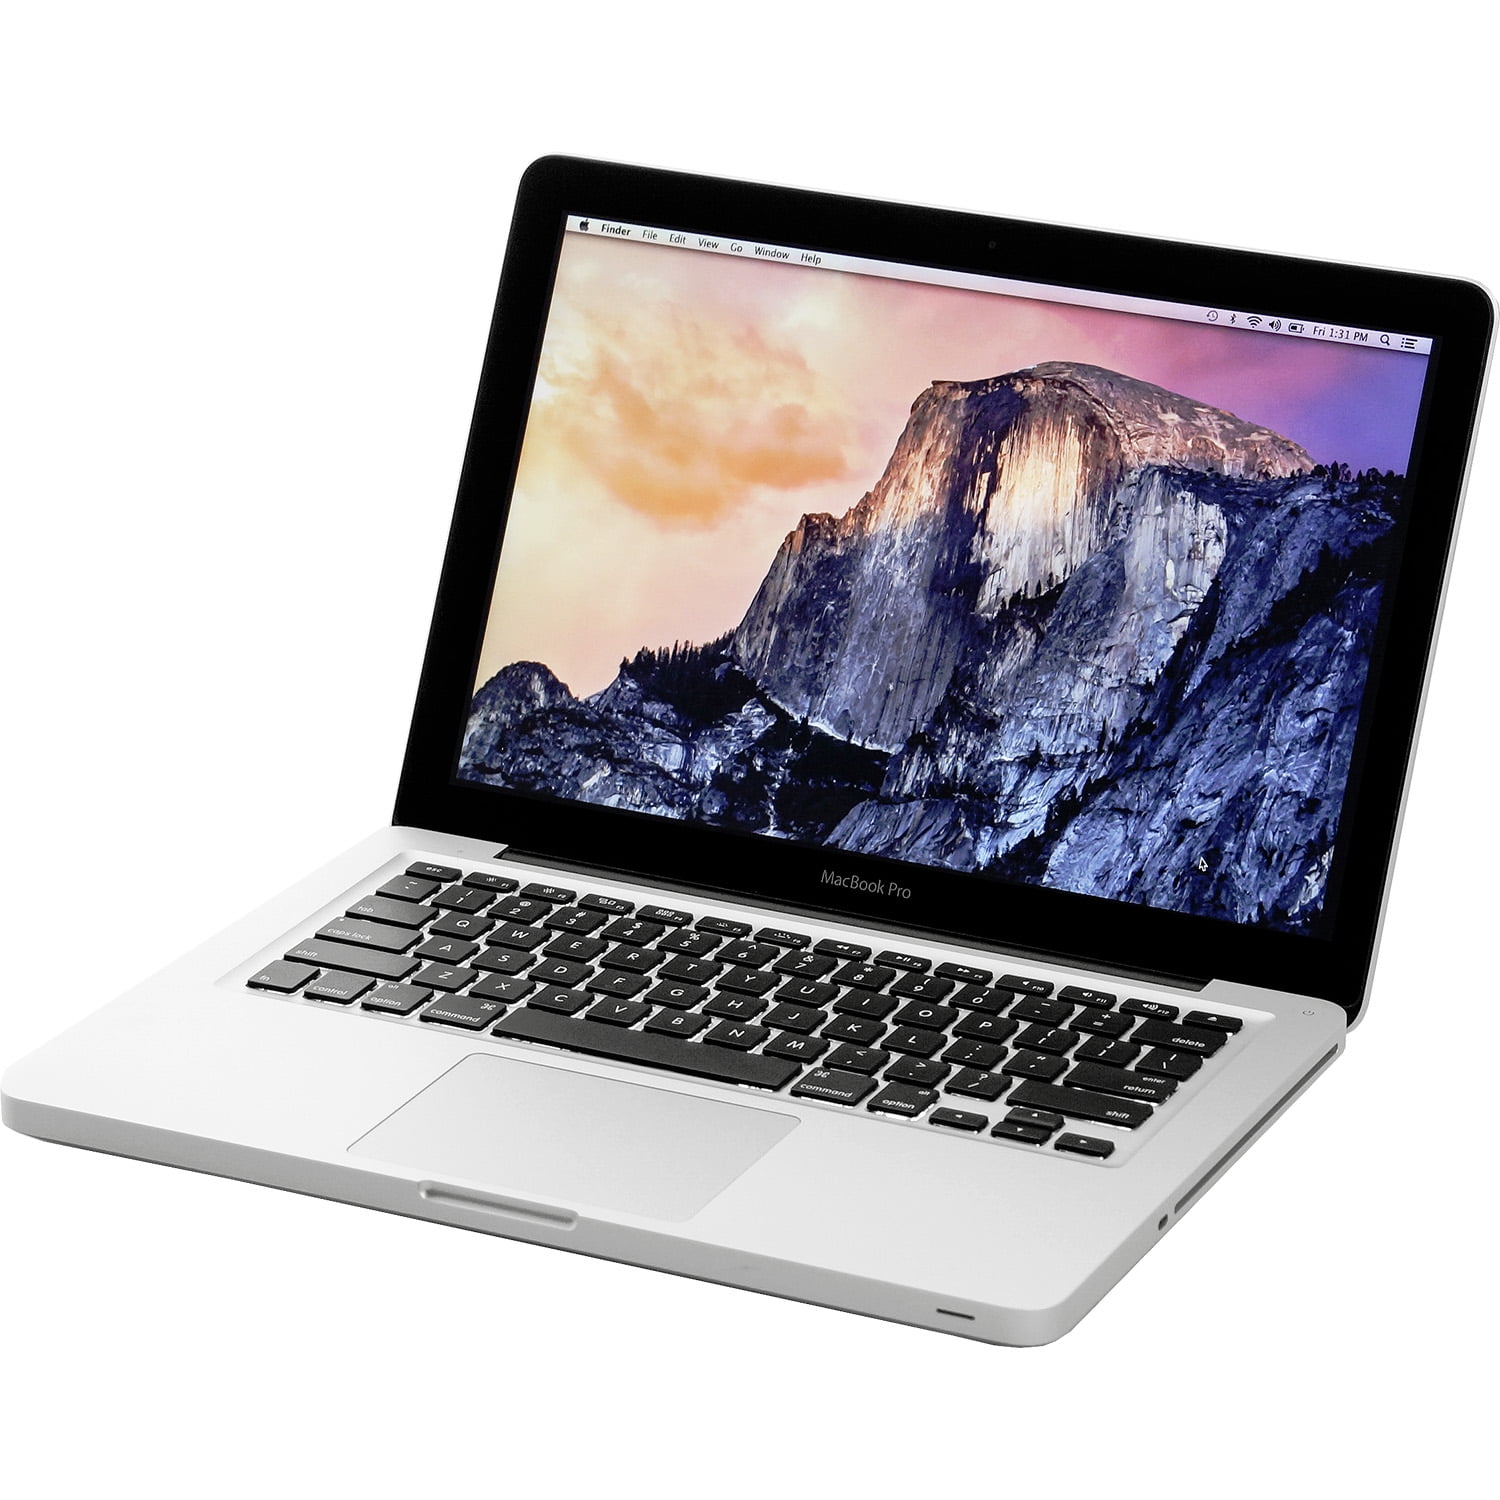 bytte rundt tub Træts webspindel Restored Apple MacBook Pro Laptop 13.3", Intel Core i7-3520M, 8GB RAM, 1TB  HDD, Mac OS, Silver, MD102LL/A (Refurbished) - Walmart.com